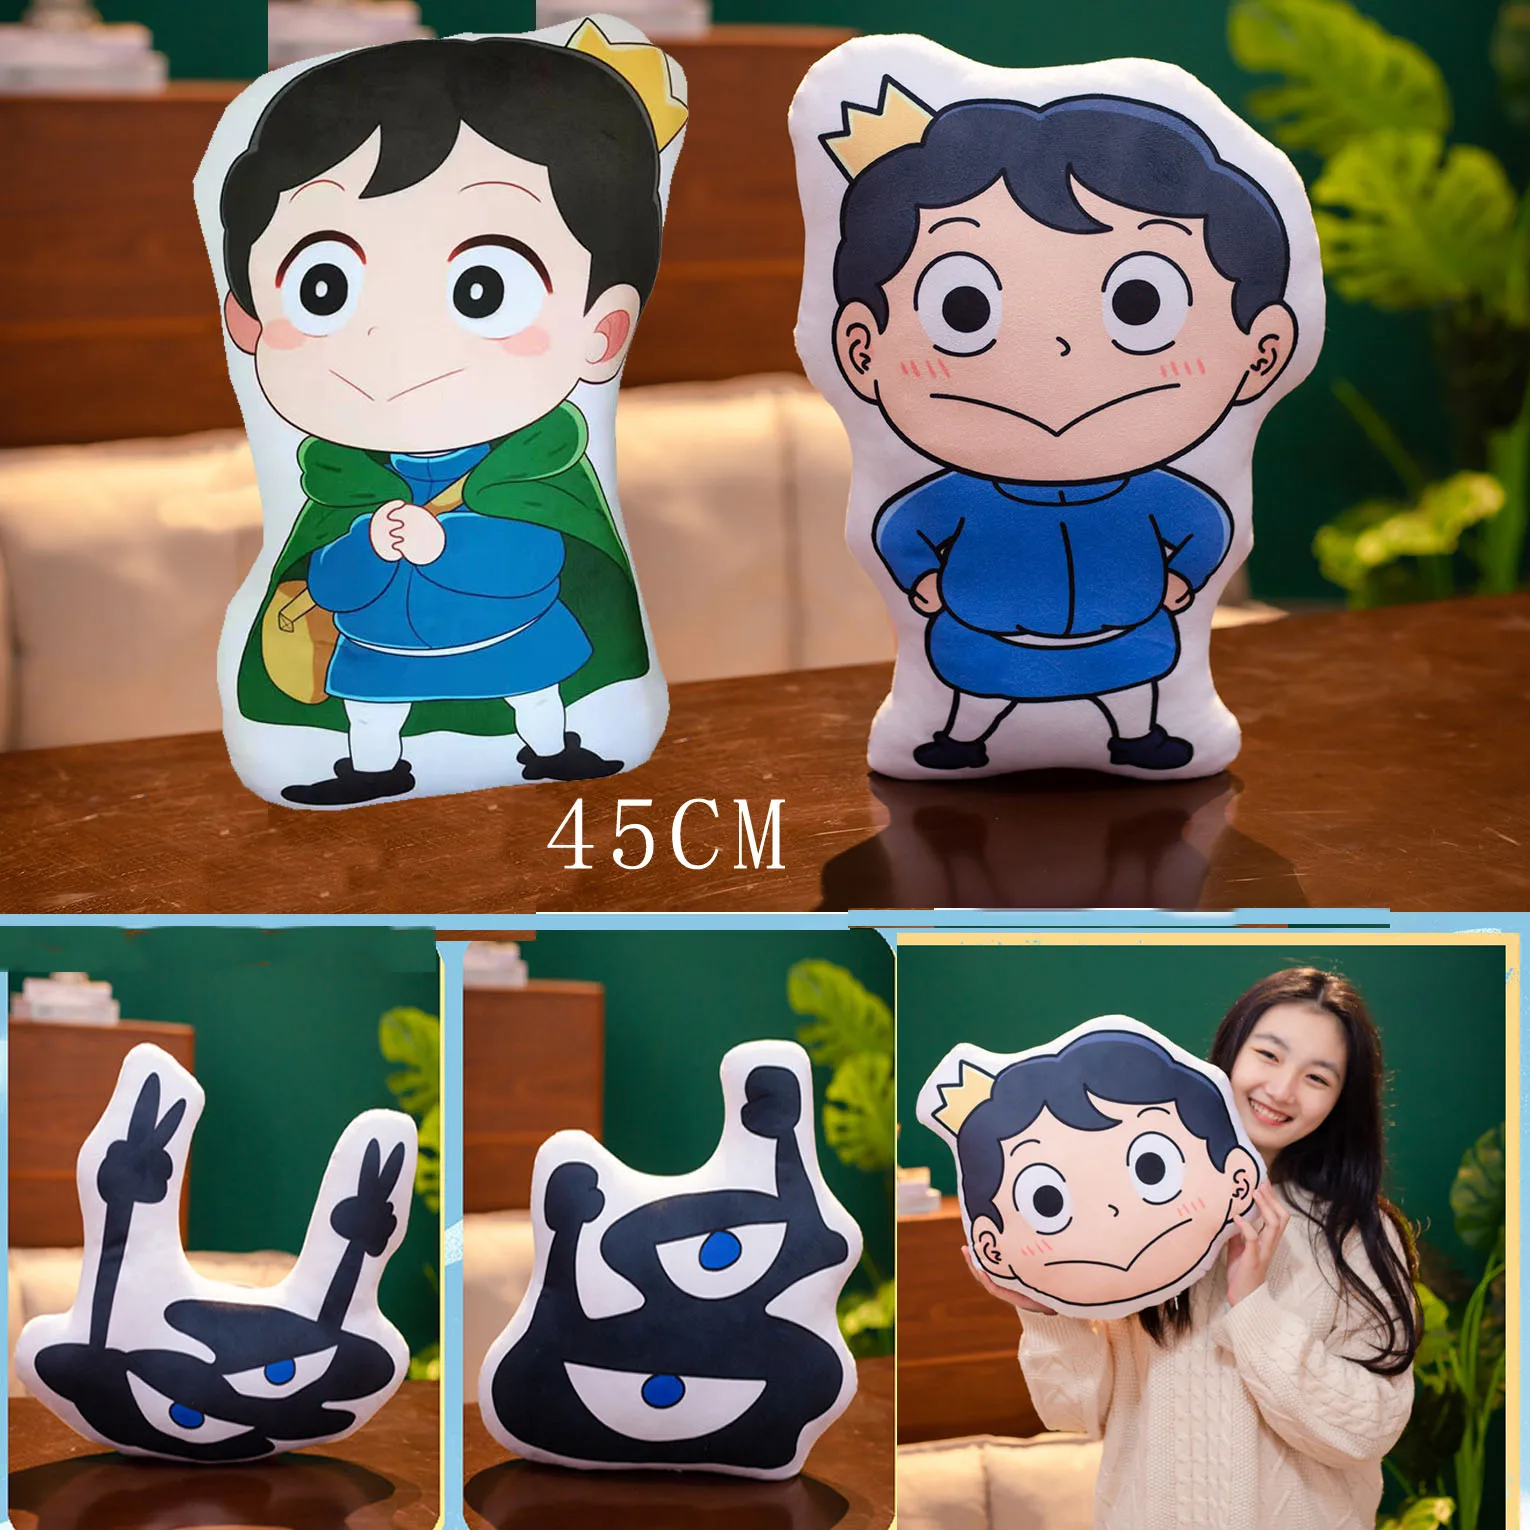 Bojji Ousama Ranking Anime Figures Toys For Children Adult Action 5 Posture  Cute Bojji 8cm Doll Collectible Car Desk Decor Gift - Action Figures -  AliExpress